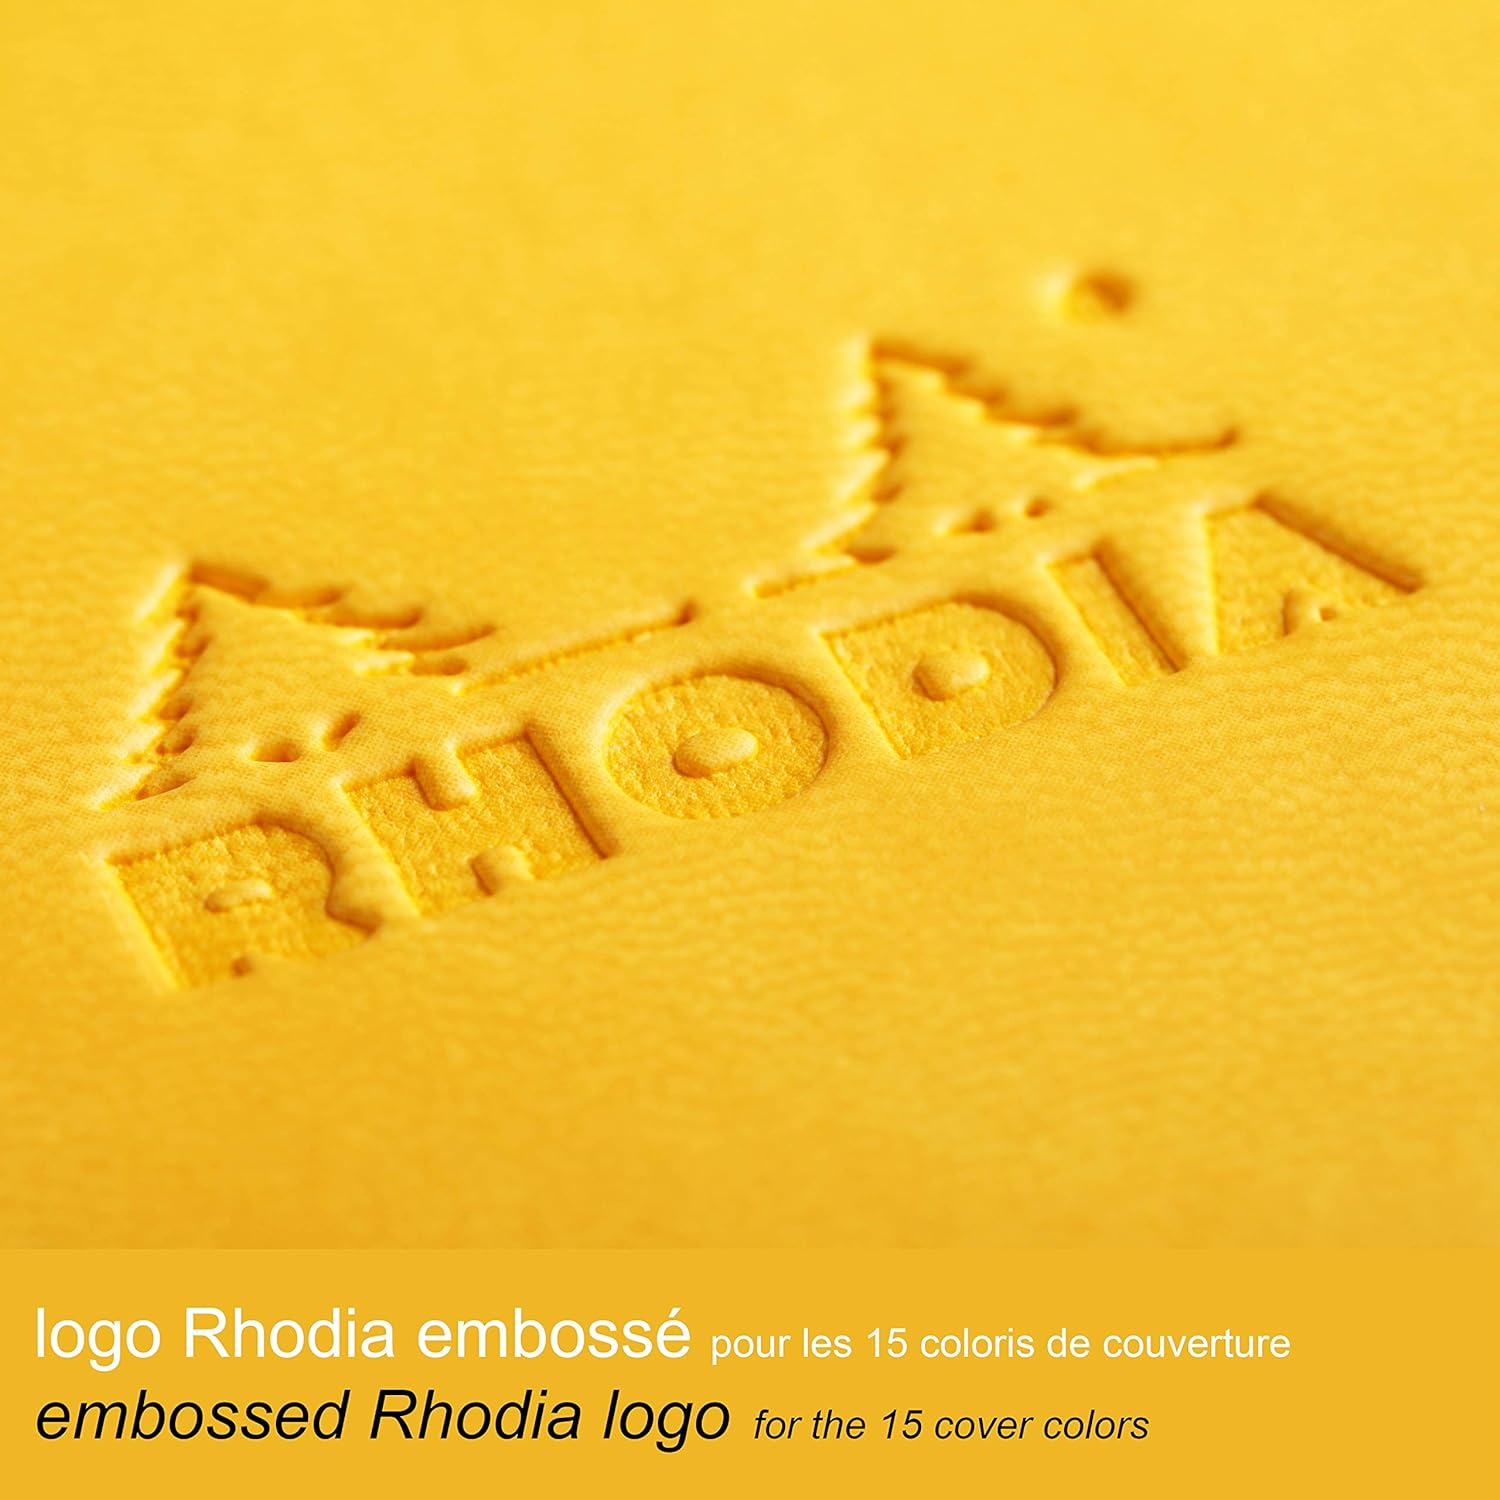 RHODIArama Webnotebook A6 Ivory Lined Hardcover-Daffodil Yellow